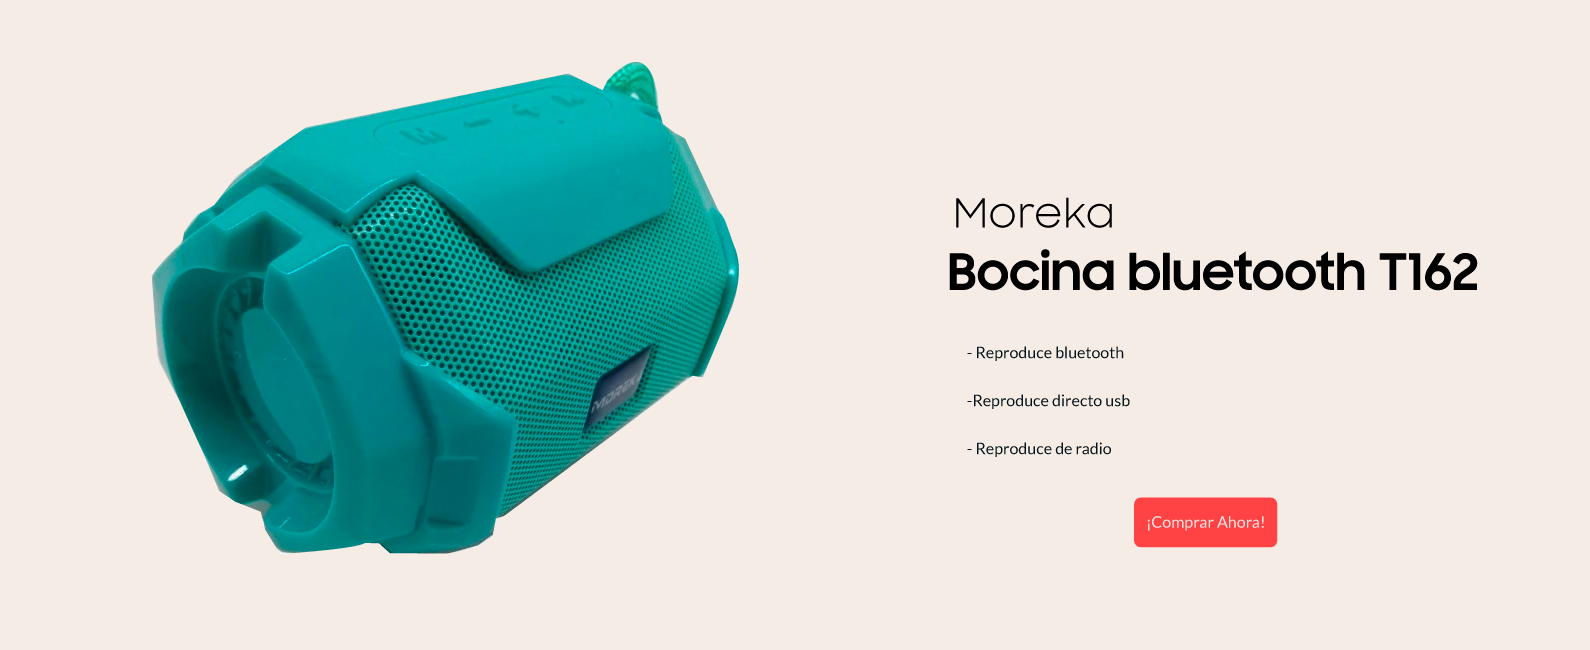 Moreka Bocina bluetooth T162